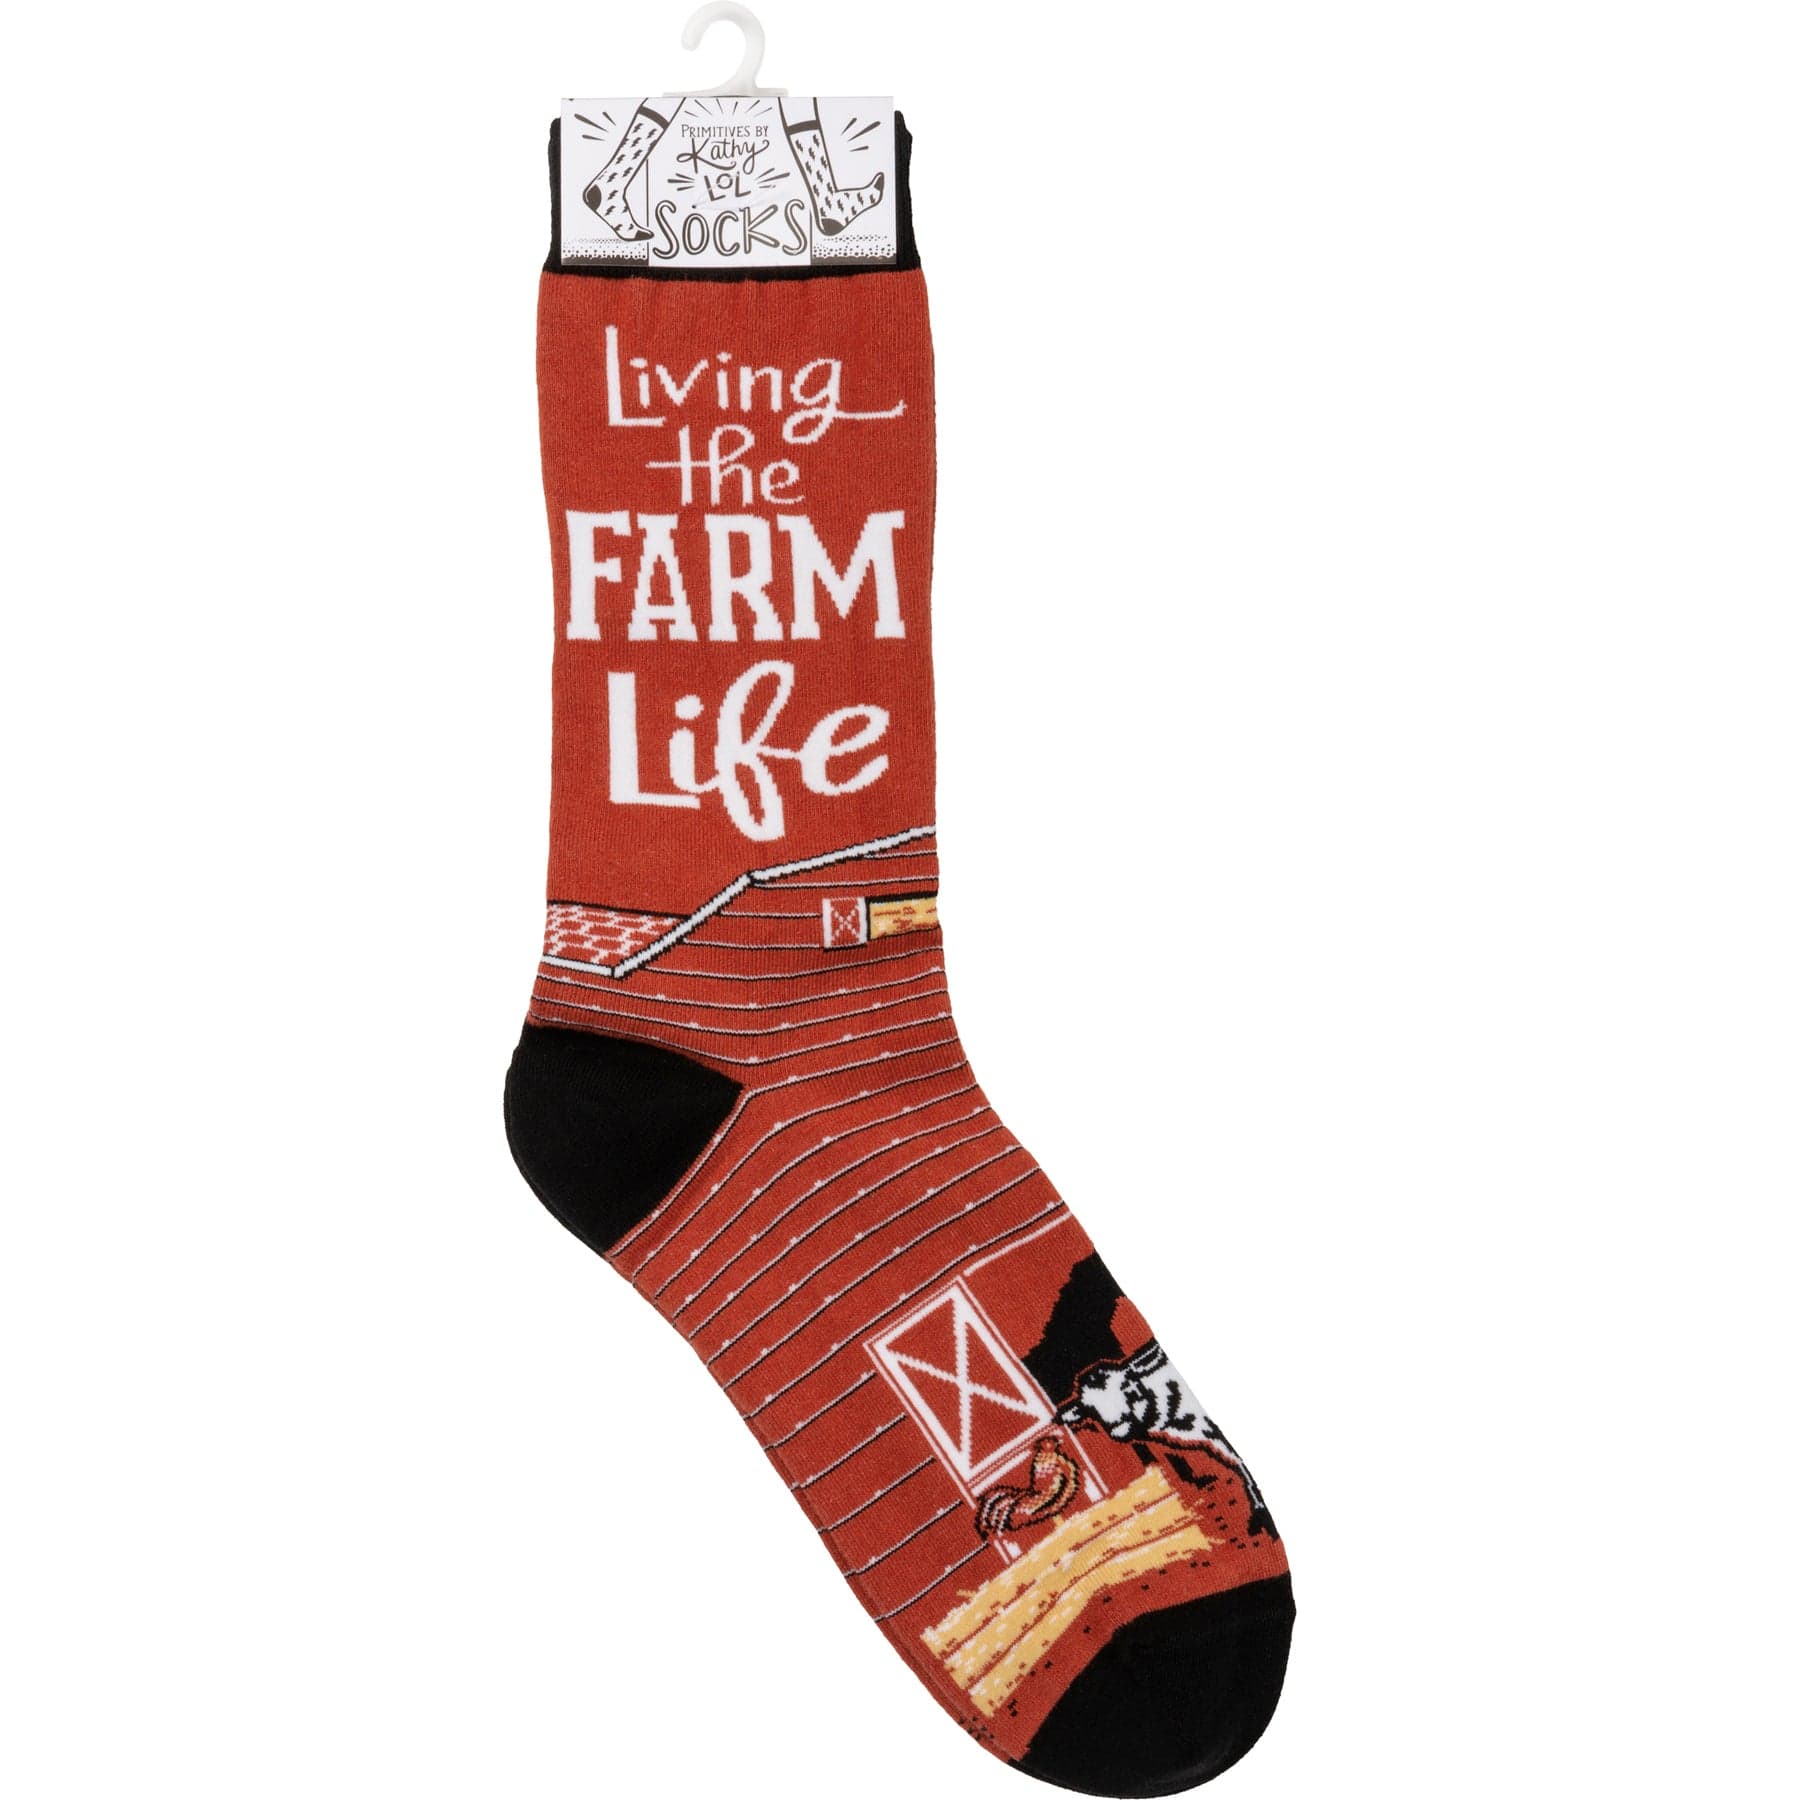 Socks One Size Fits Most Socks - Living The Farm Life PBK-107203